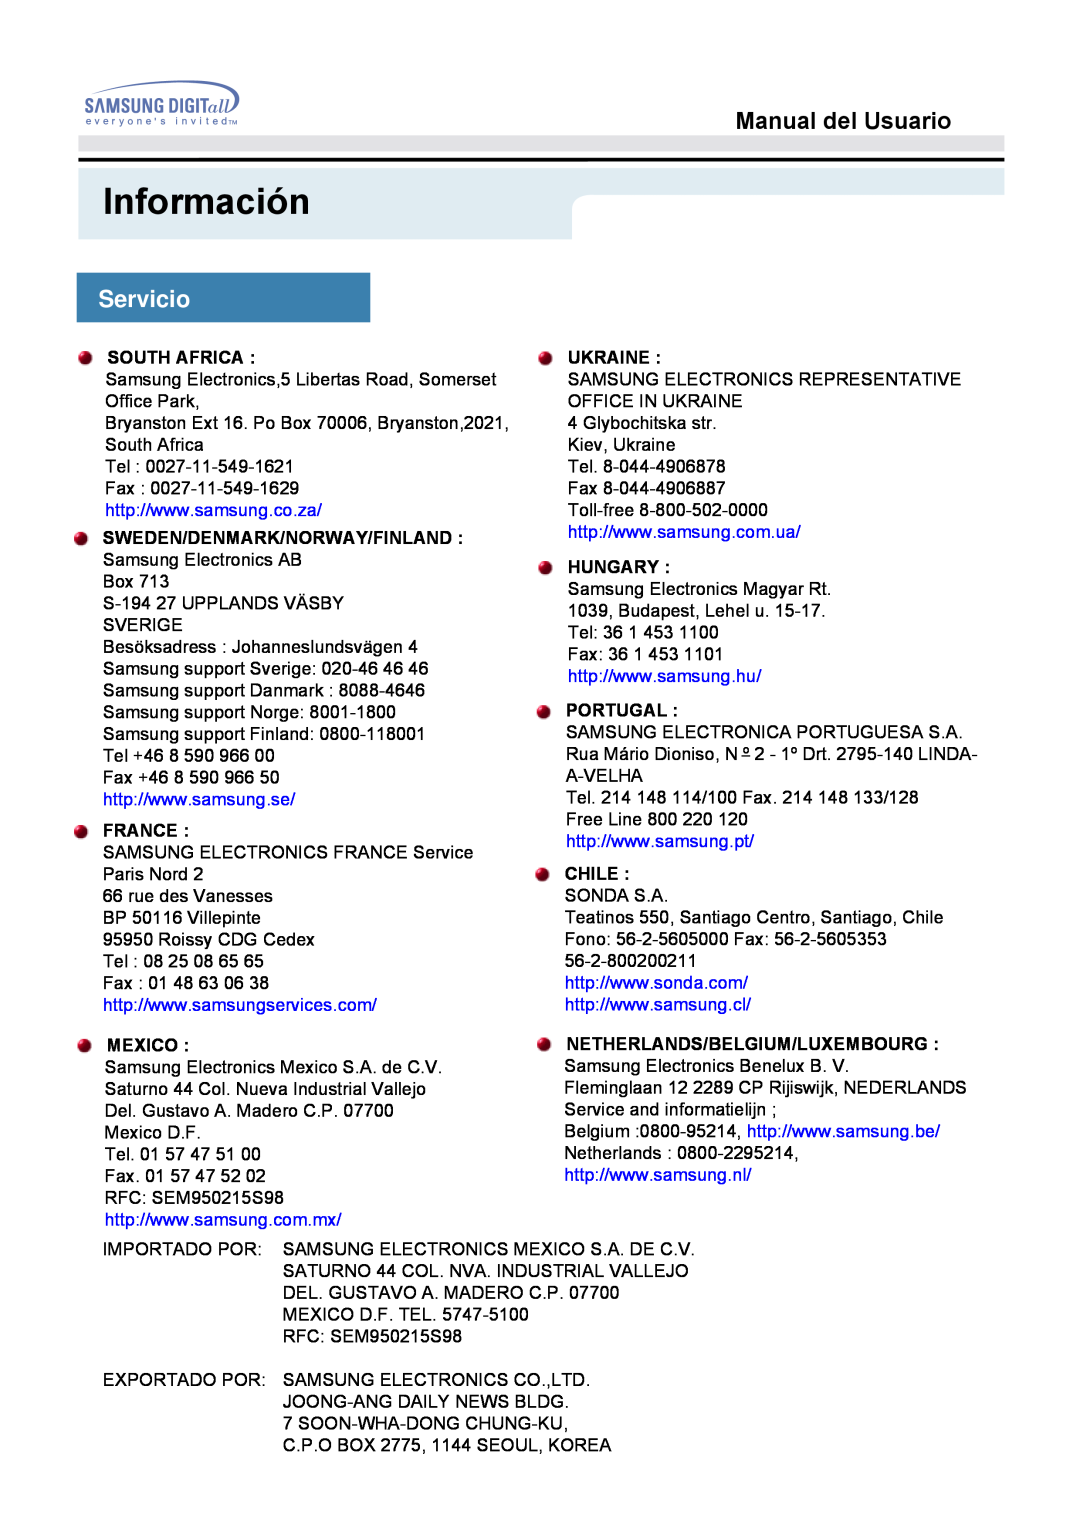 Samsung MO17ESZSZ/EDC manual Información, Manual del Usuario, Servicio, South Africa, Sweden/Denmark/Norway/Finland, France 